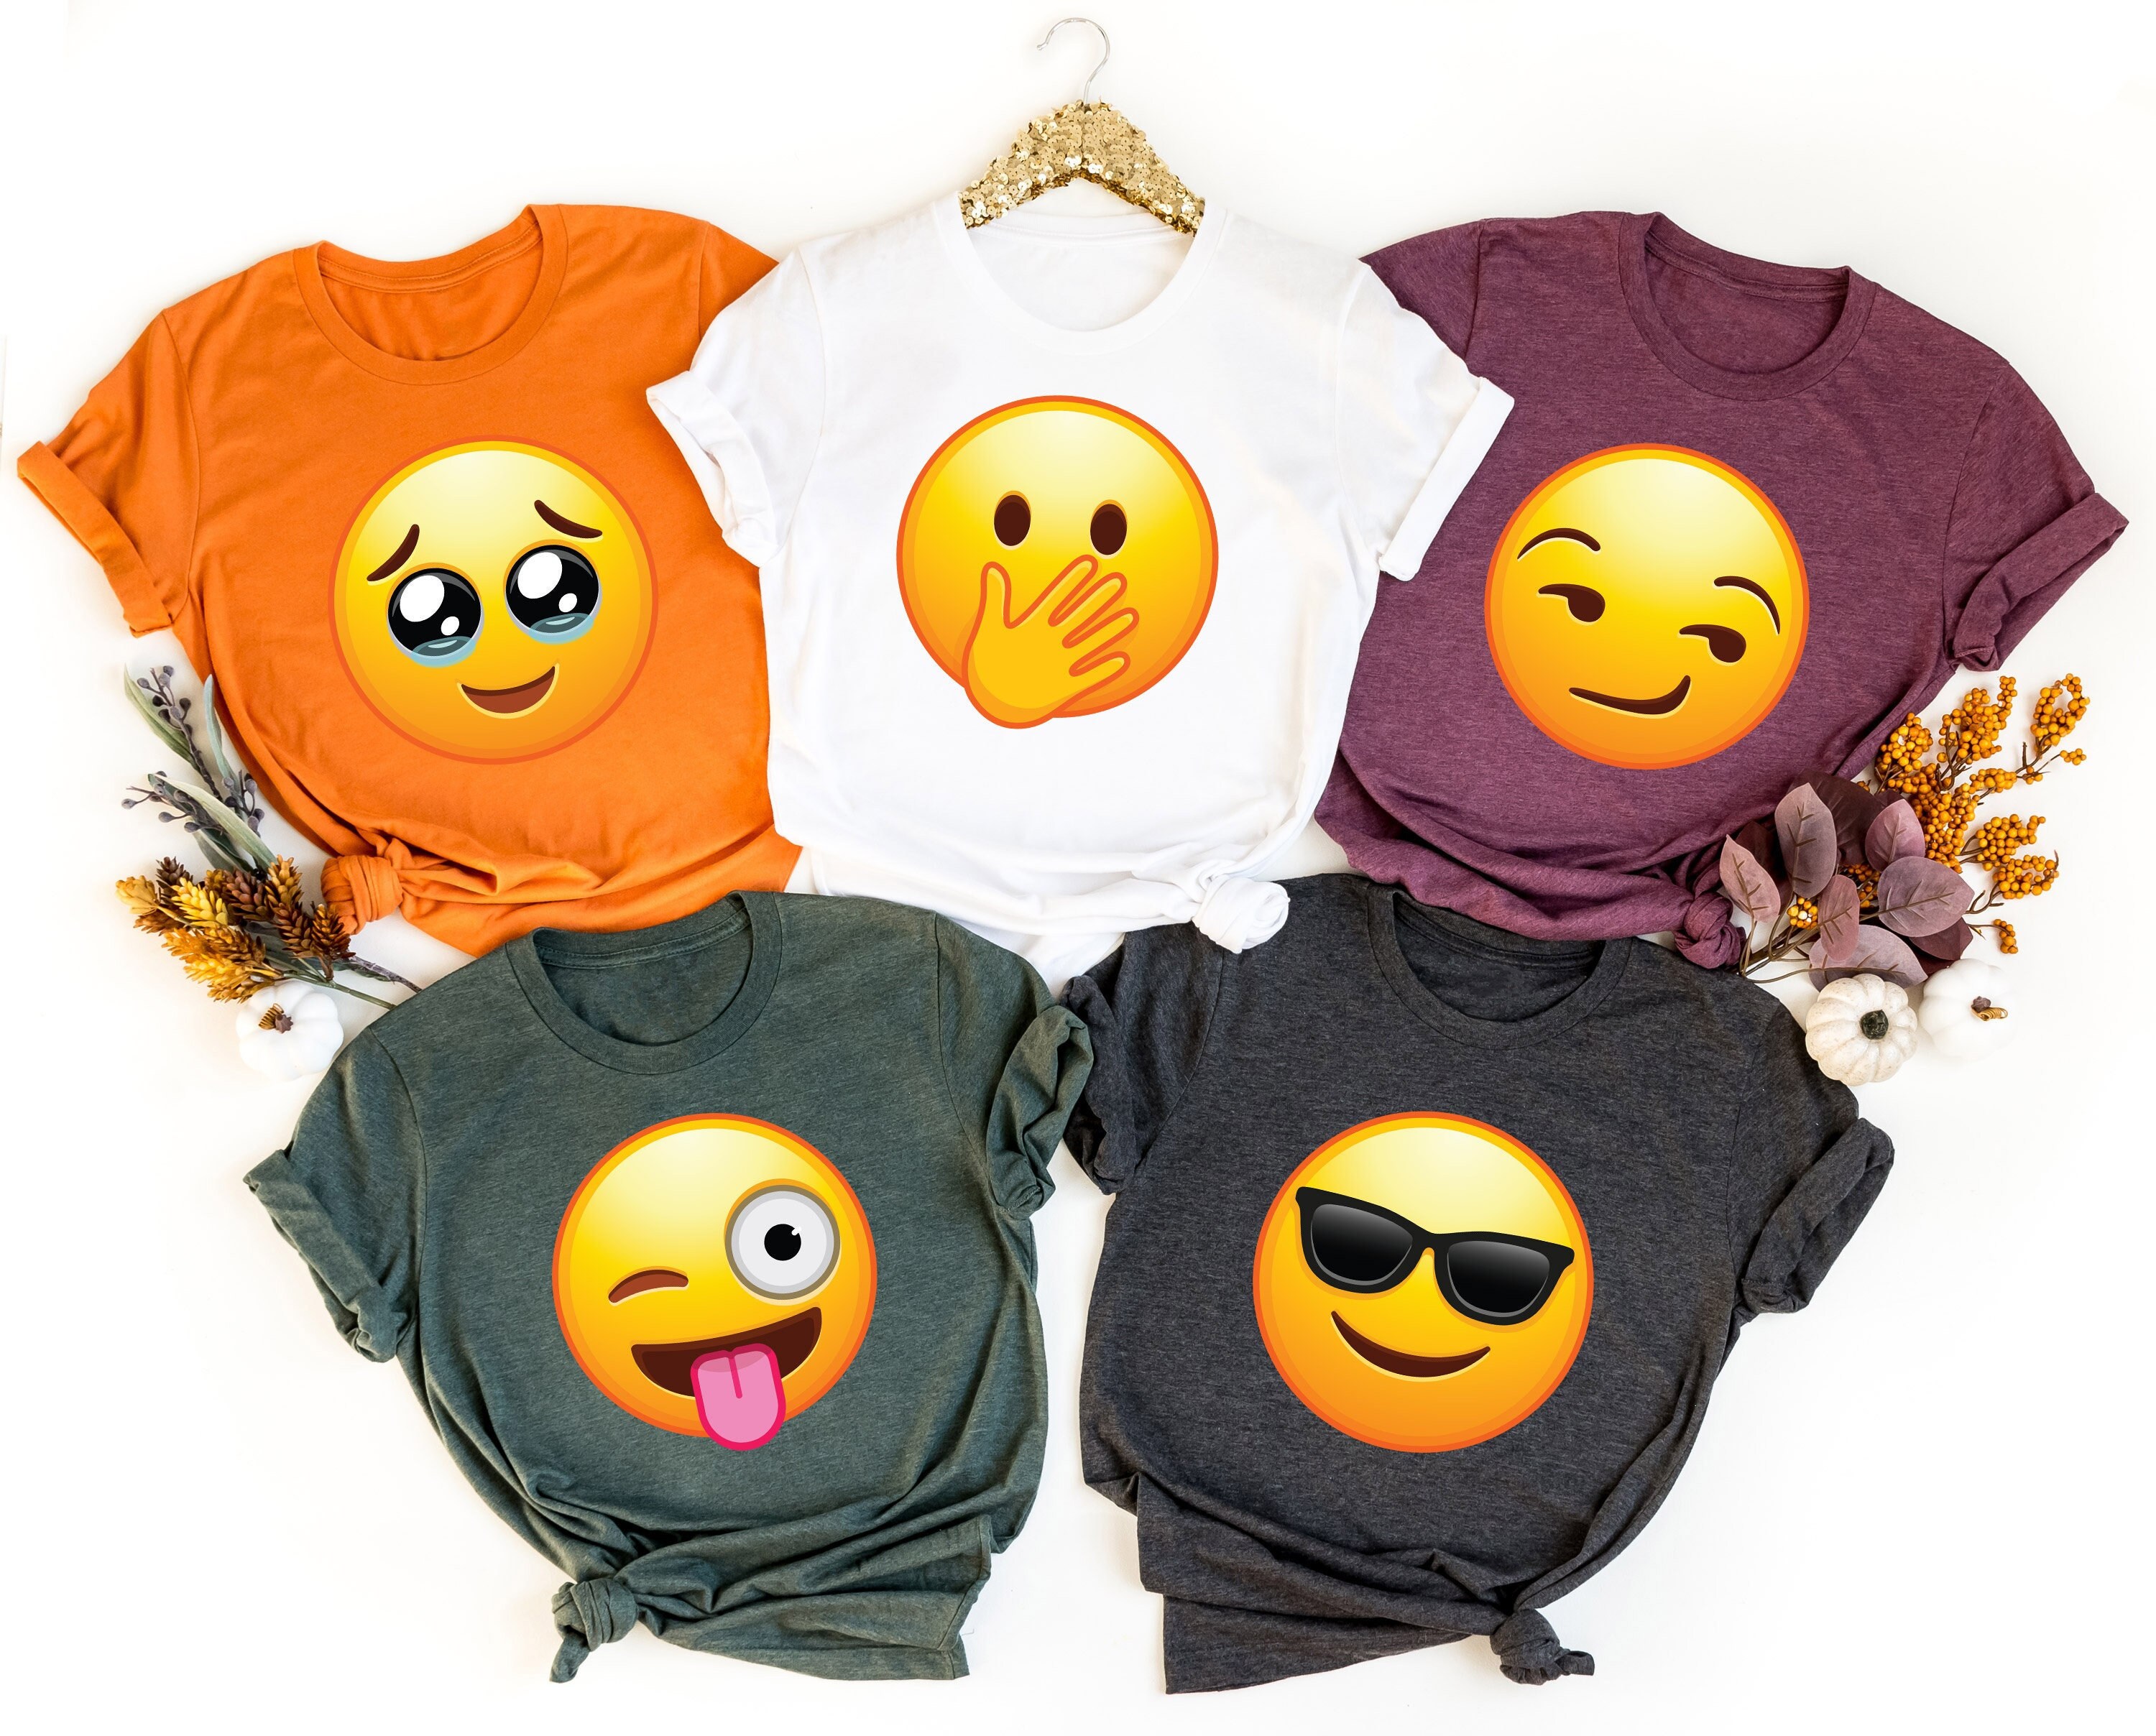 👕 T-Shirt Emoji